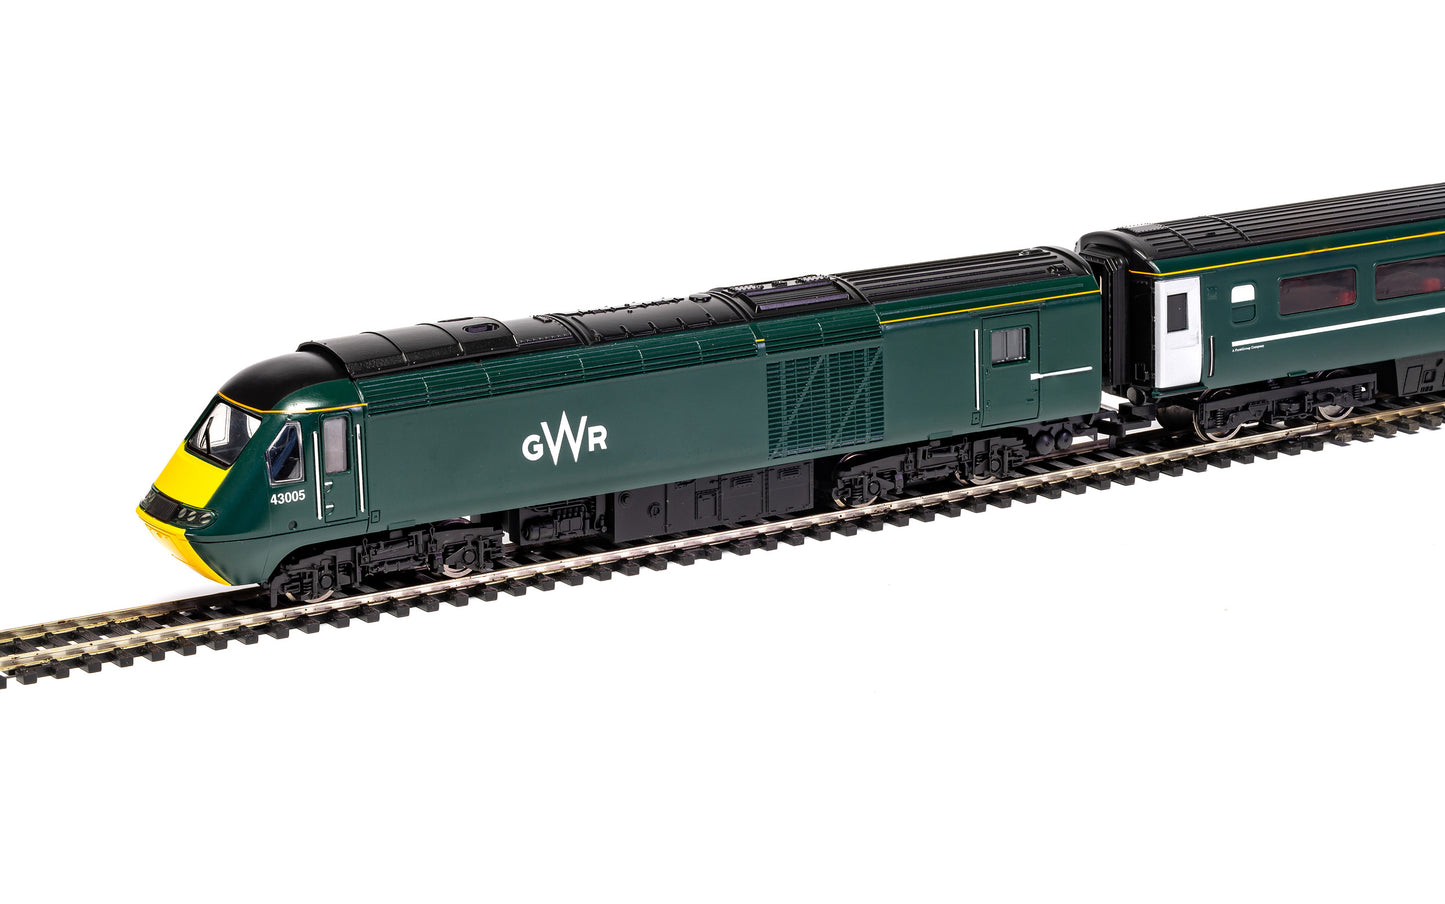 Hornby R1230M - GWR High Speed Train Set